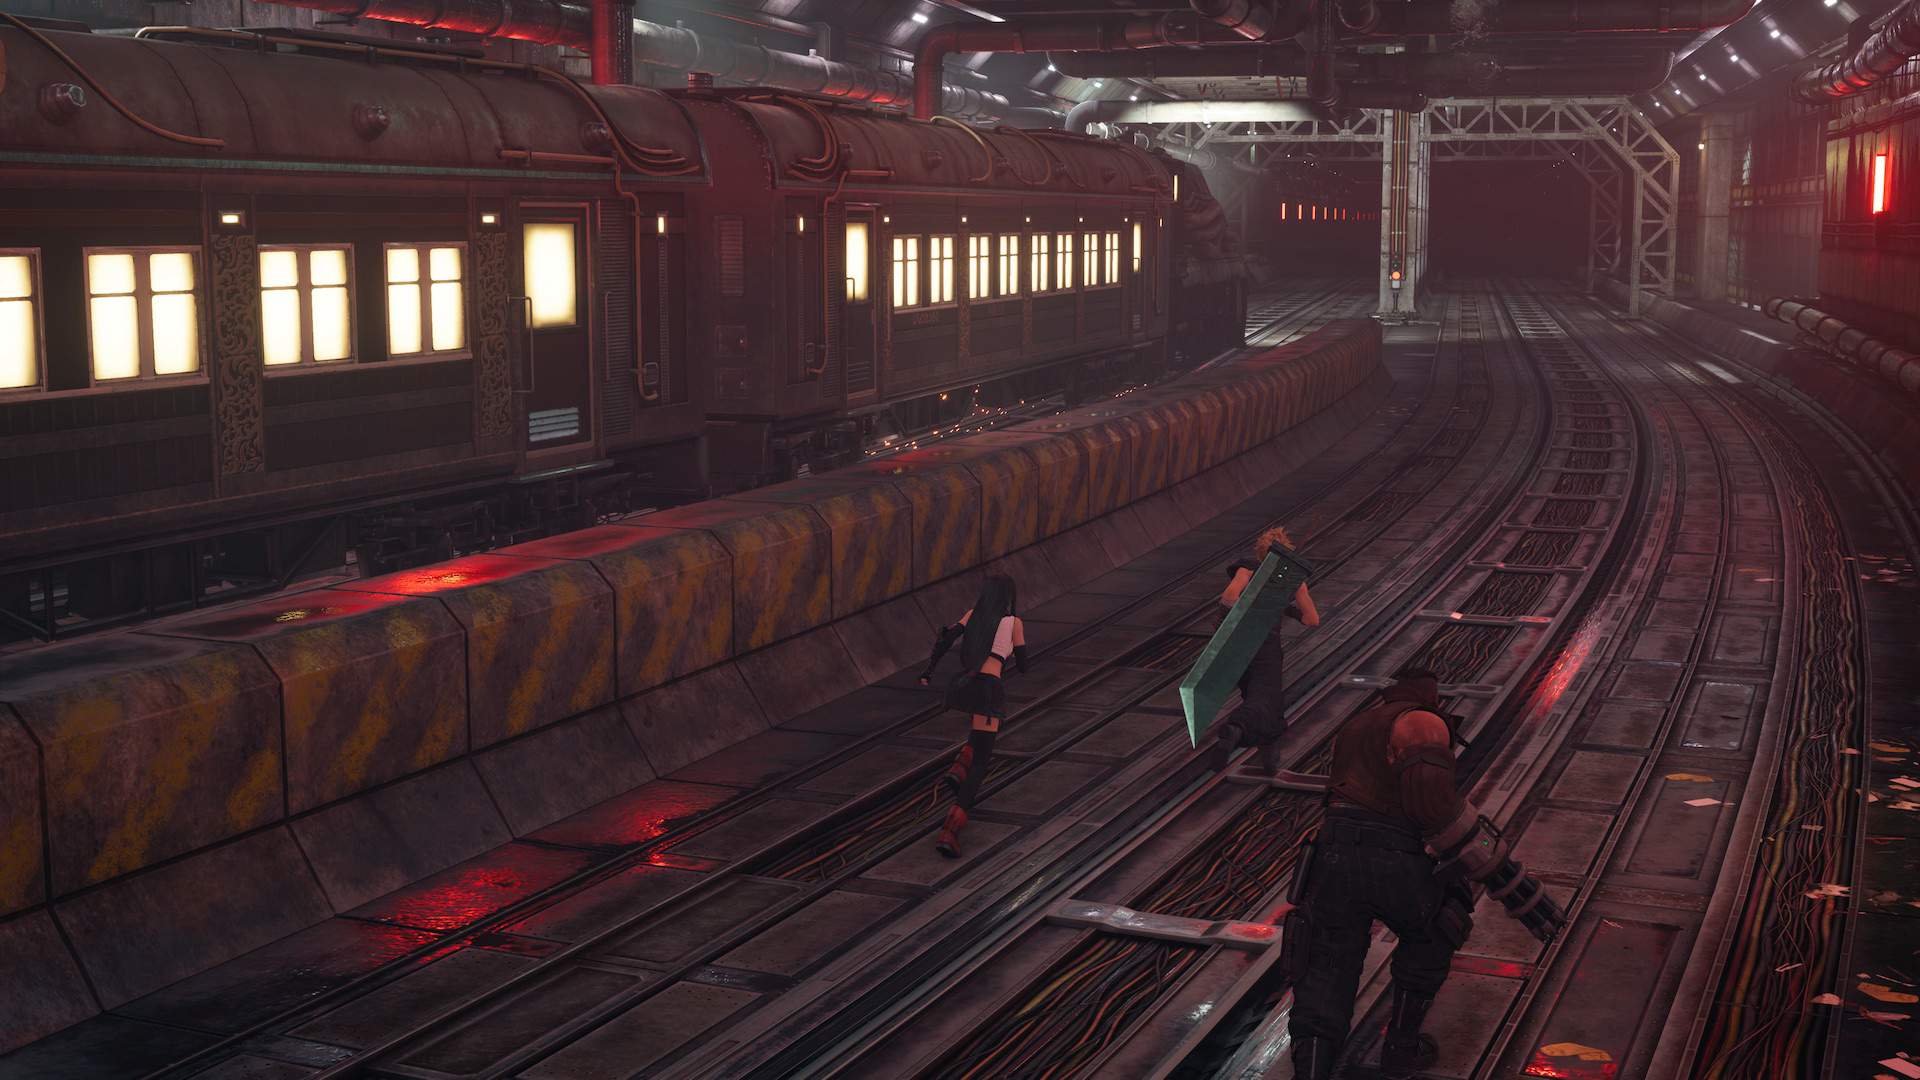 Cloud, Barret and Tifa run along a train line, as a train speeds past